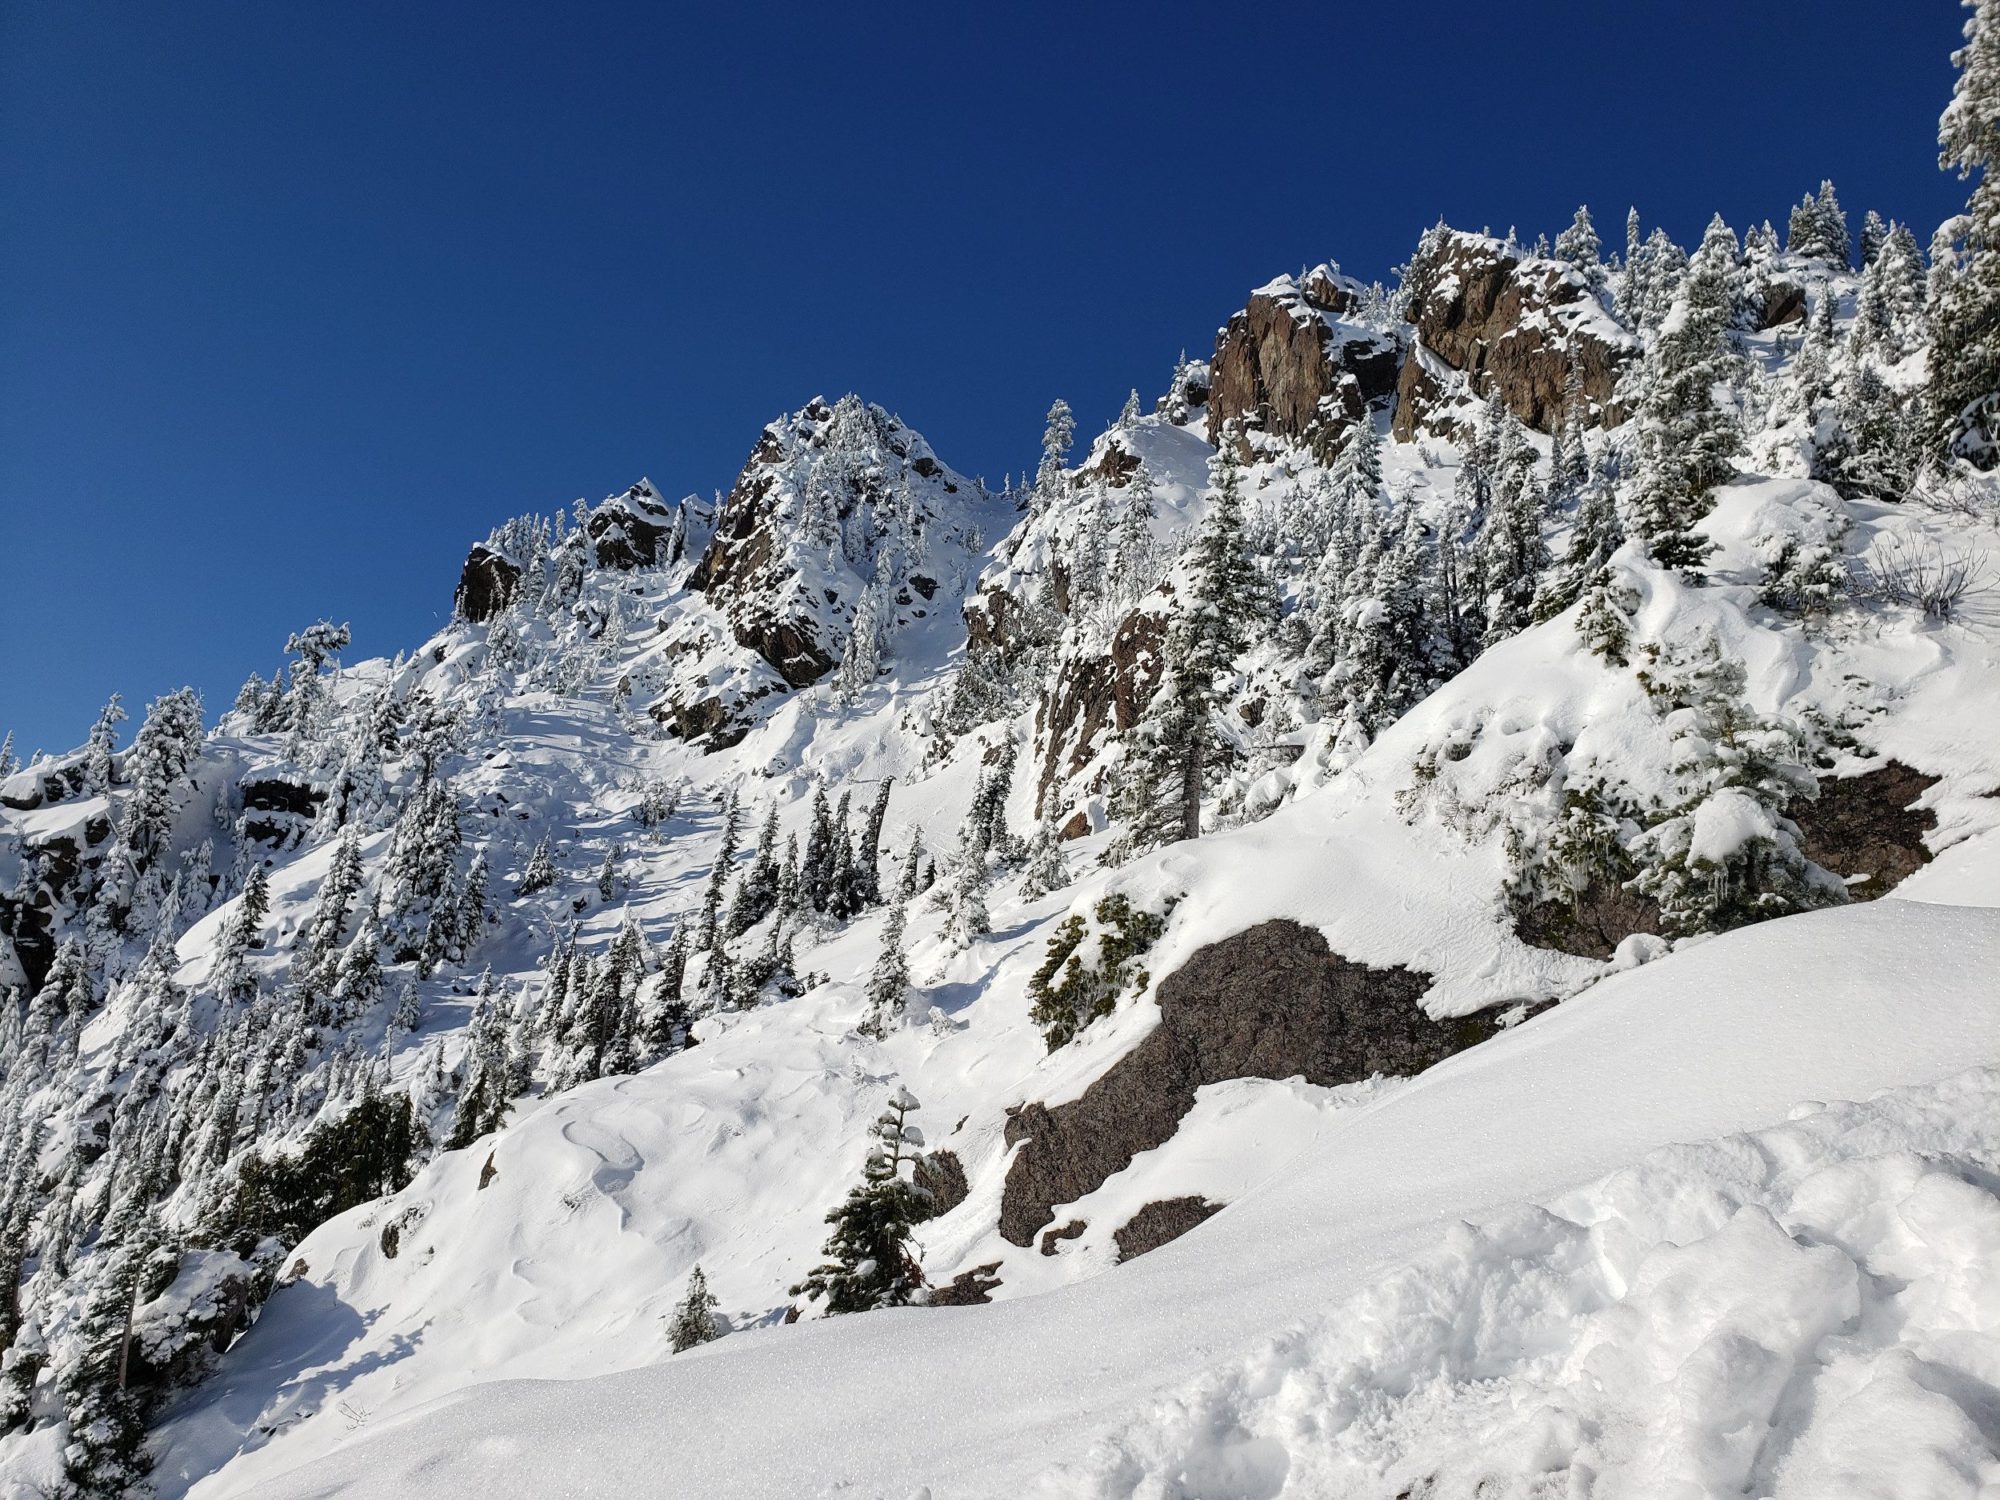 rocky outcrop near the summit of mount ellinor